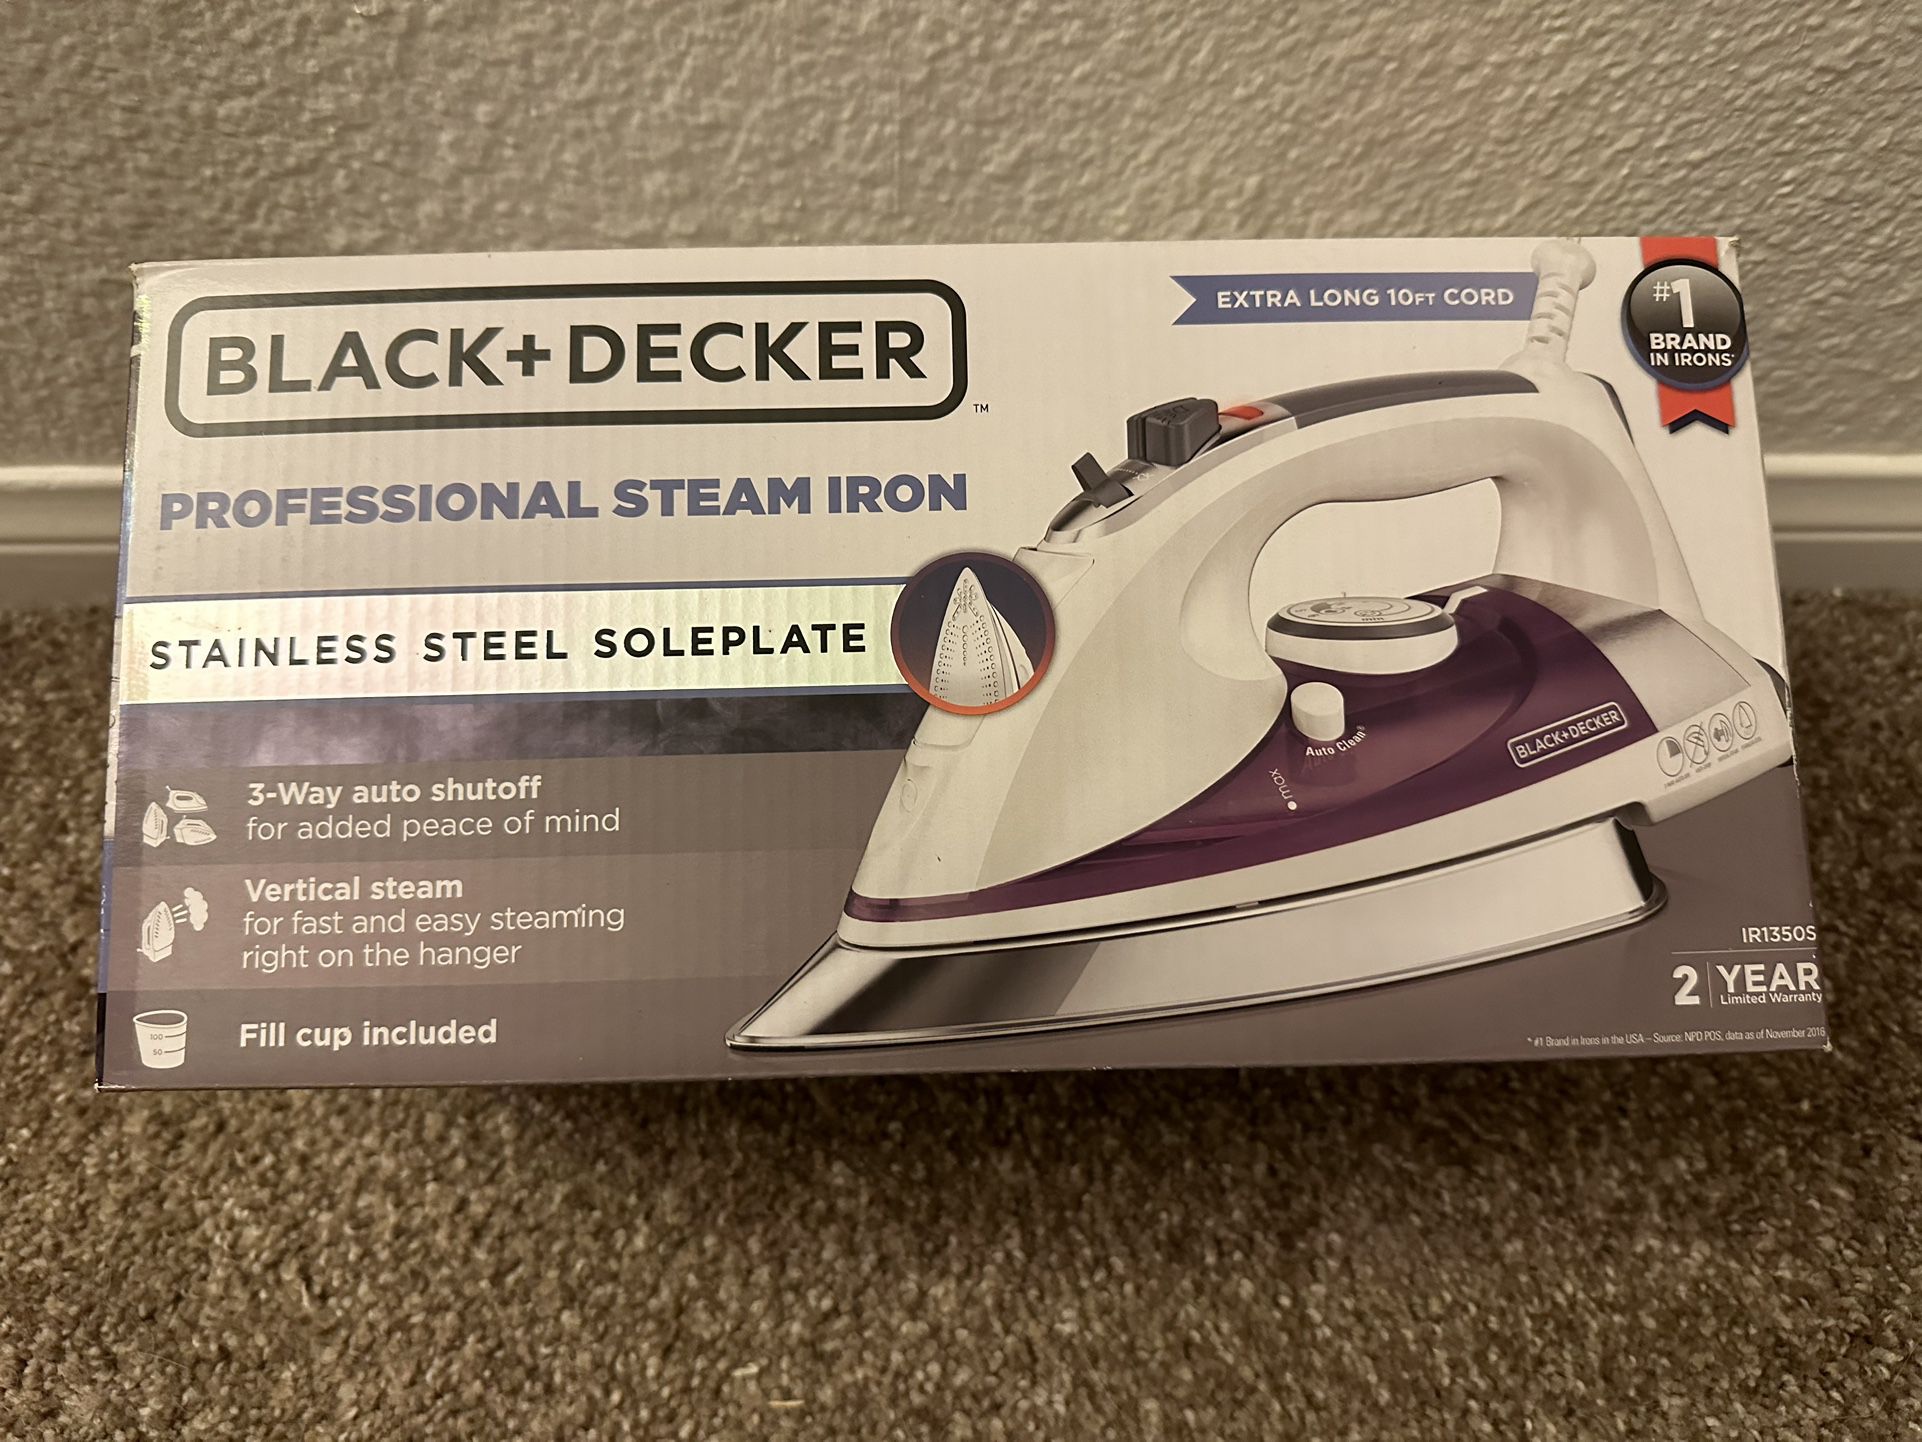 Black & Decker Black & Decker IR1350S Professional Steam Iron IR1350S